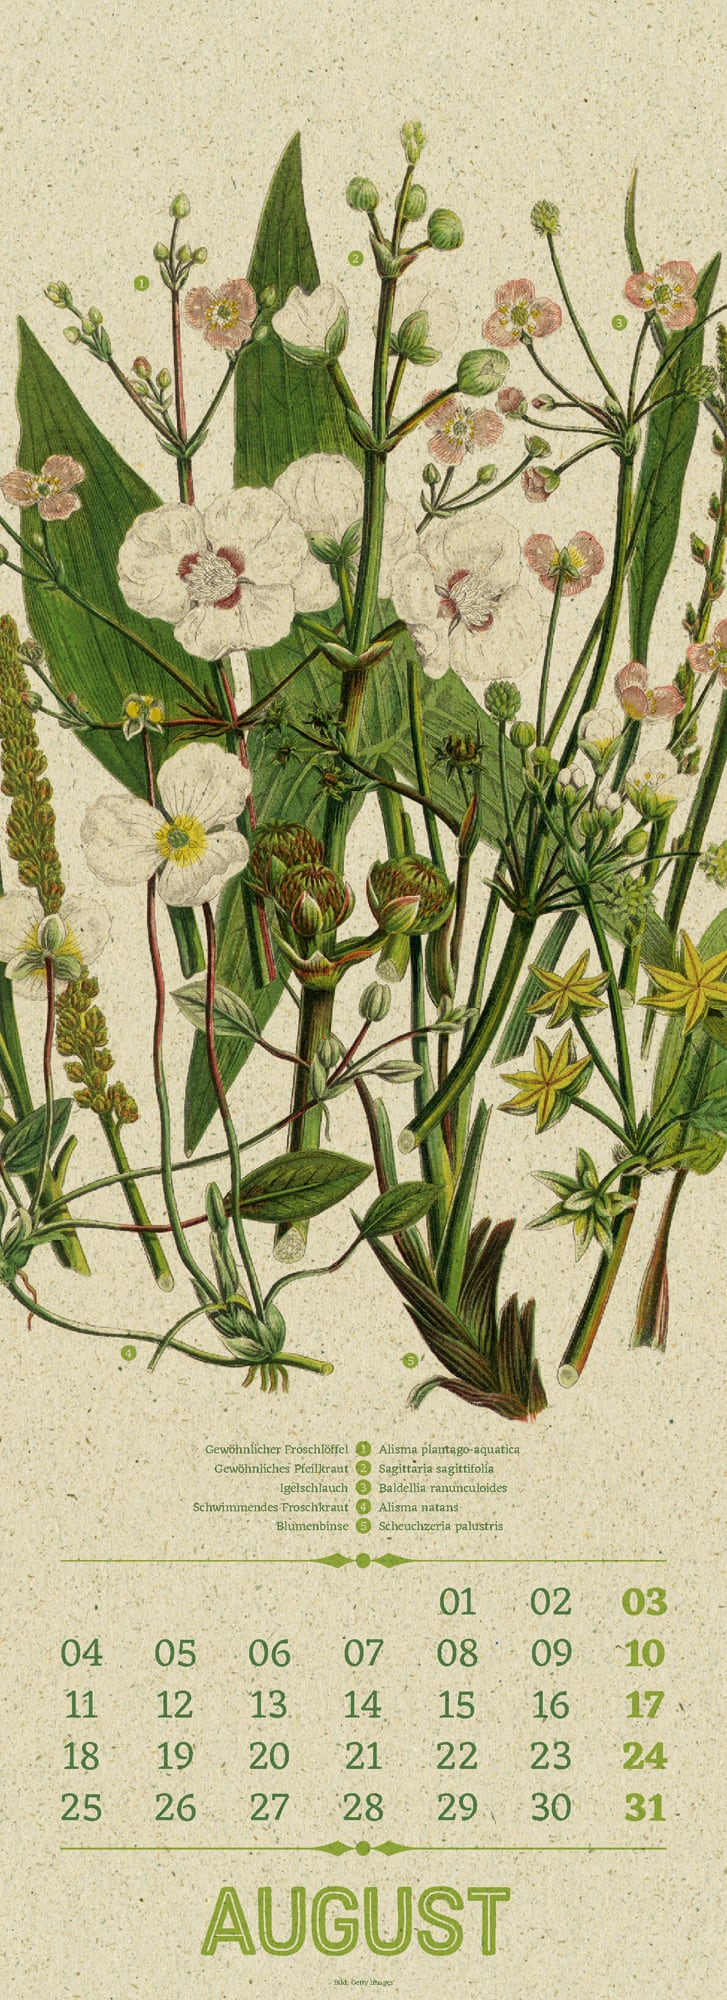 Ackermann Calendar Wild Plants 2025 - Inside View 08